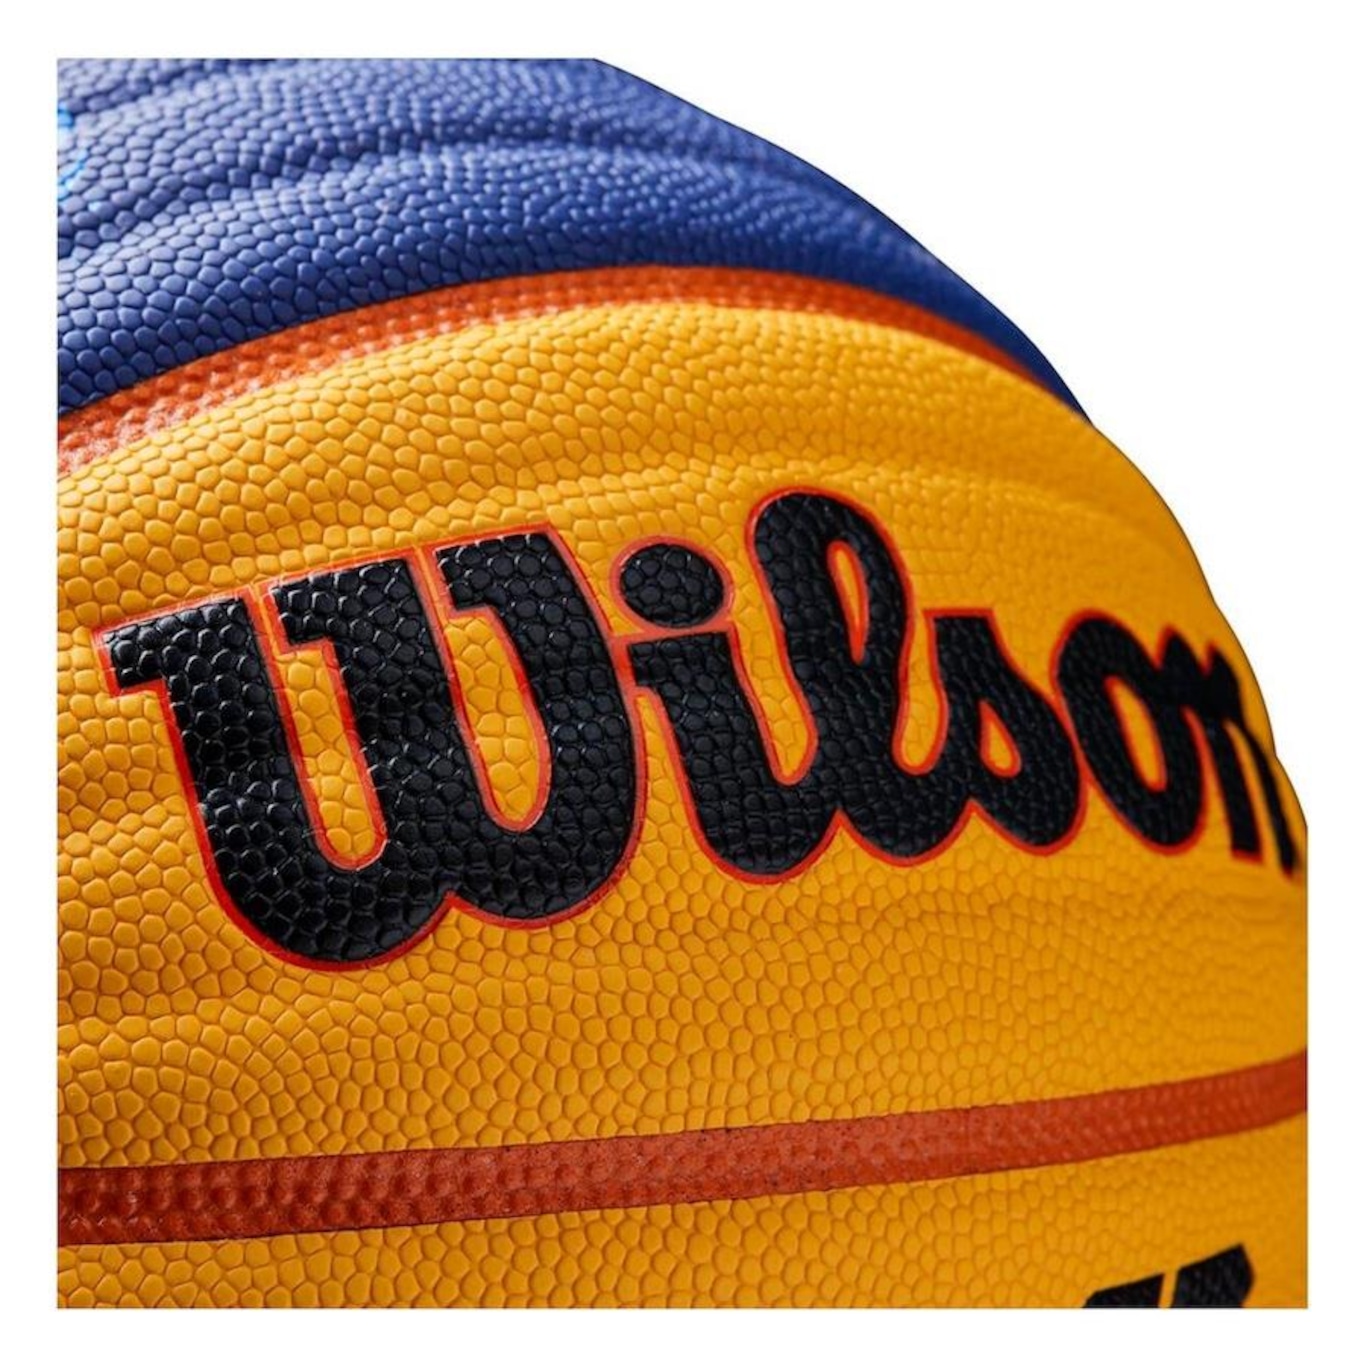 WILSON Bola de basquete unissex MVP, laranja, 7